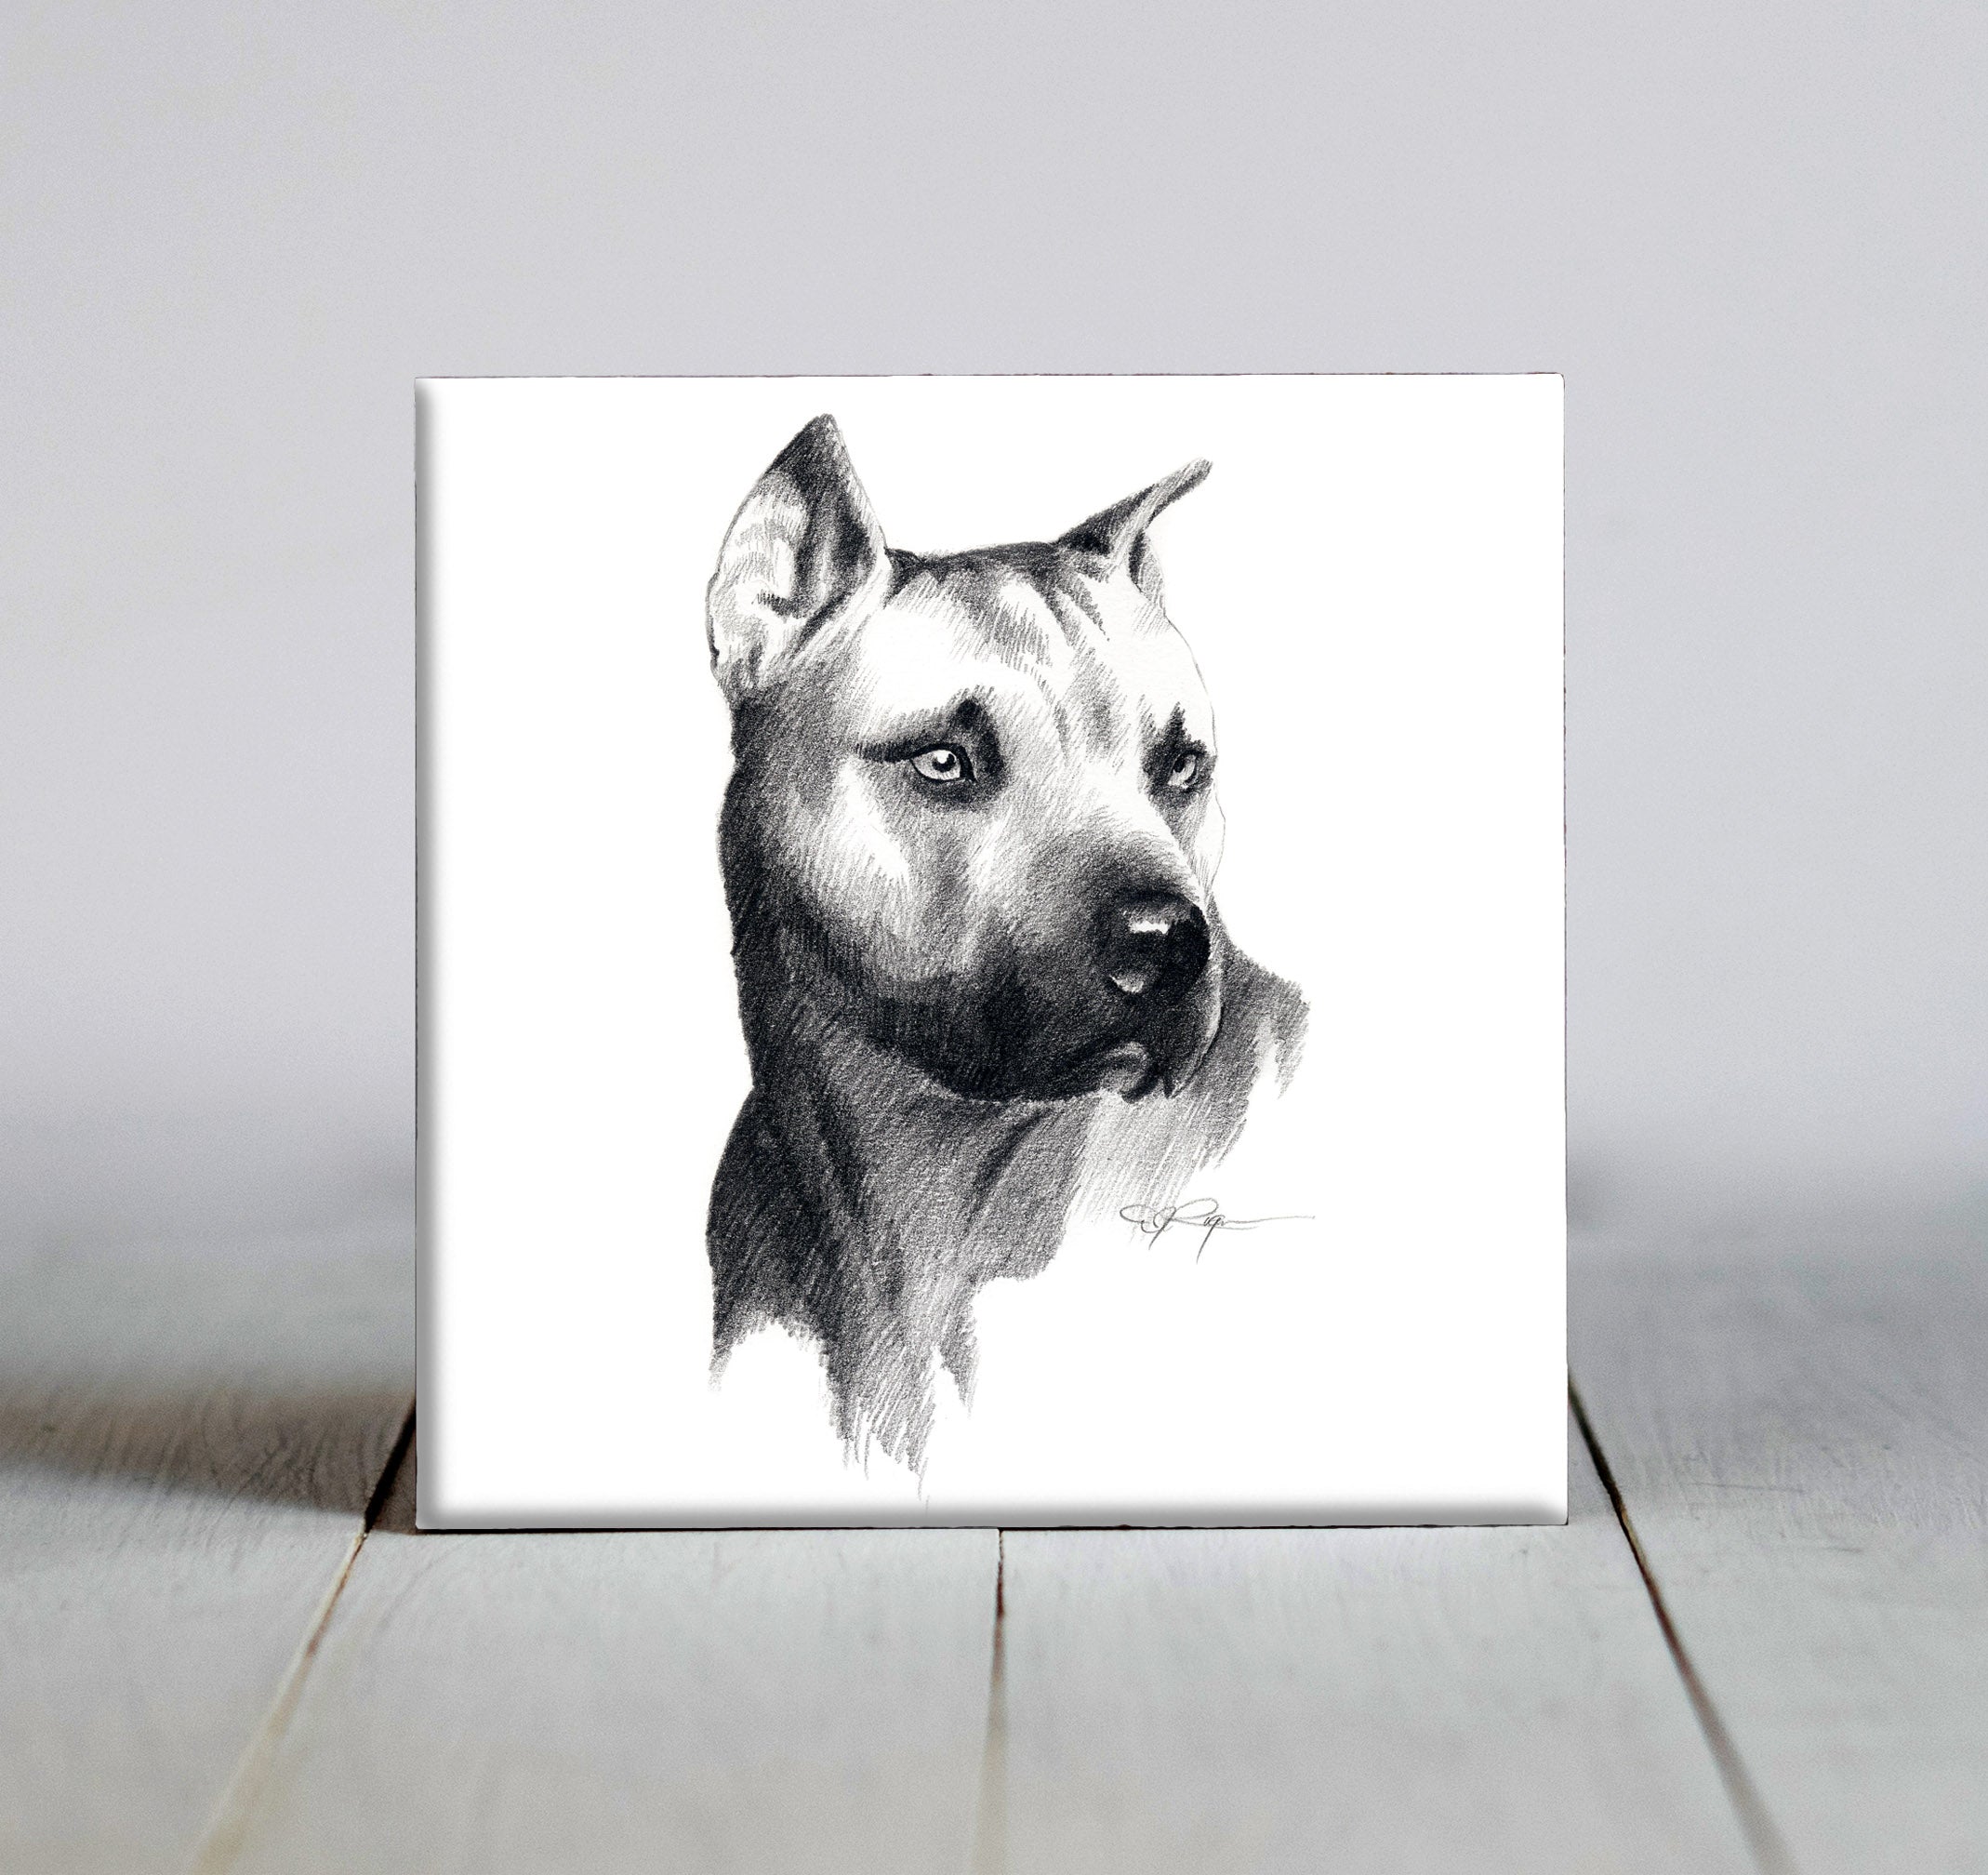 American Pit Bull Terrier Pencil Dog Art Decorative Tile by Artist DJ Rogers